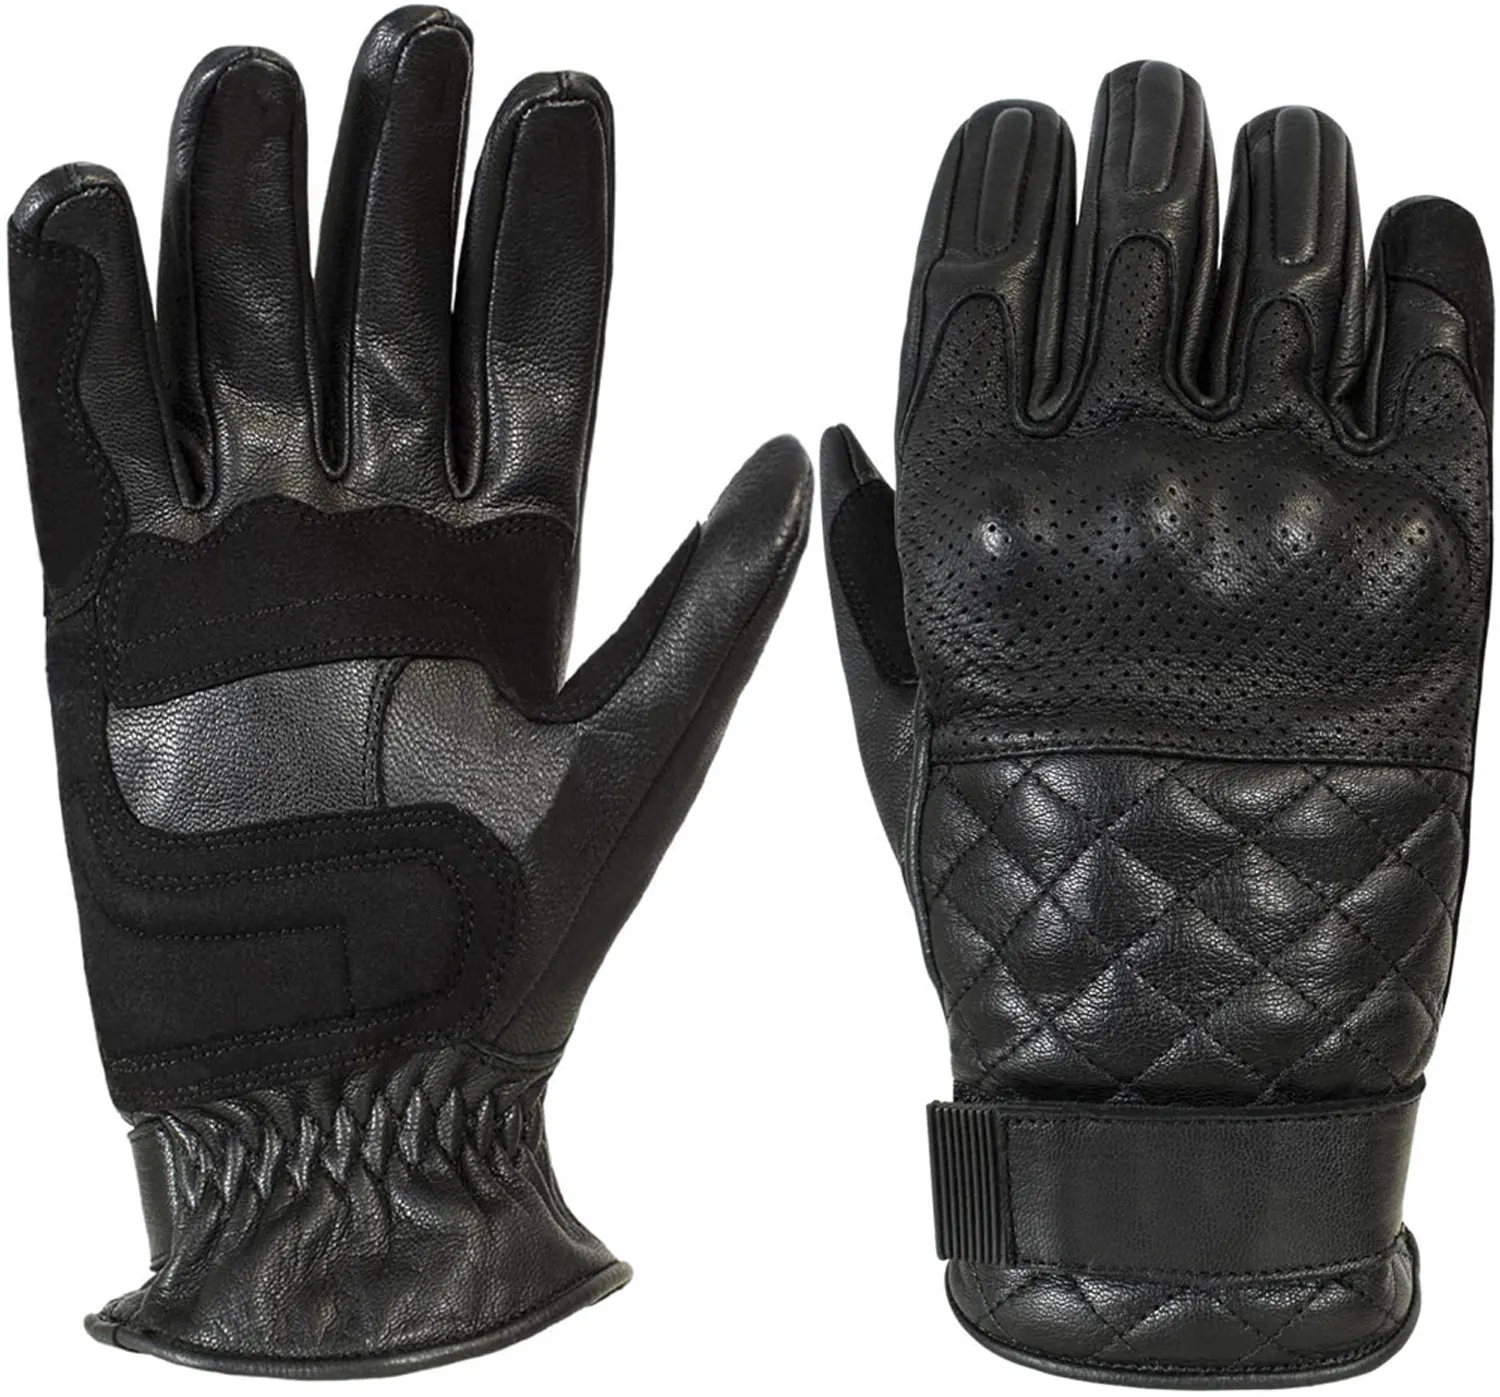 Hot Sale motocross racing motorcycle gloves Leather Motorbike motorcycle gloves riding gloves